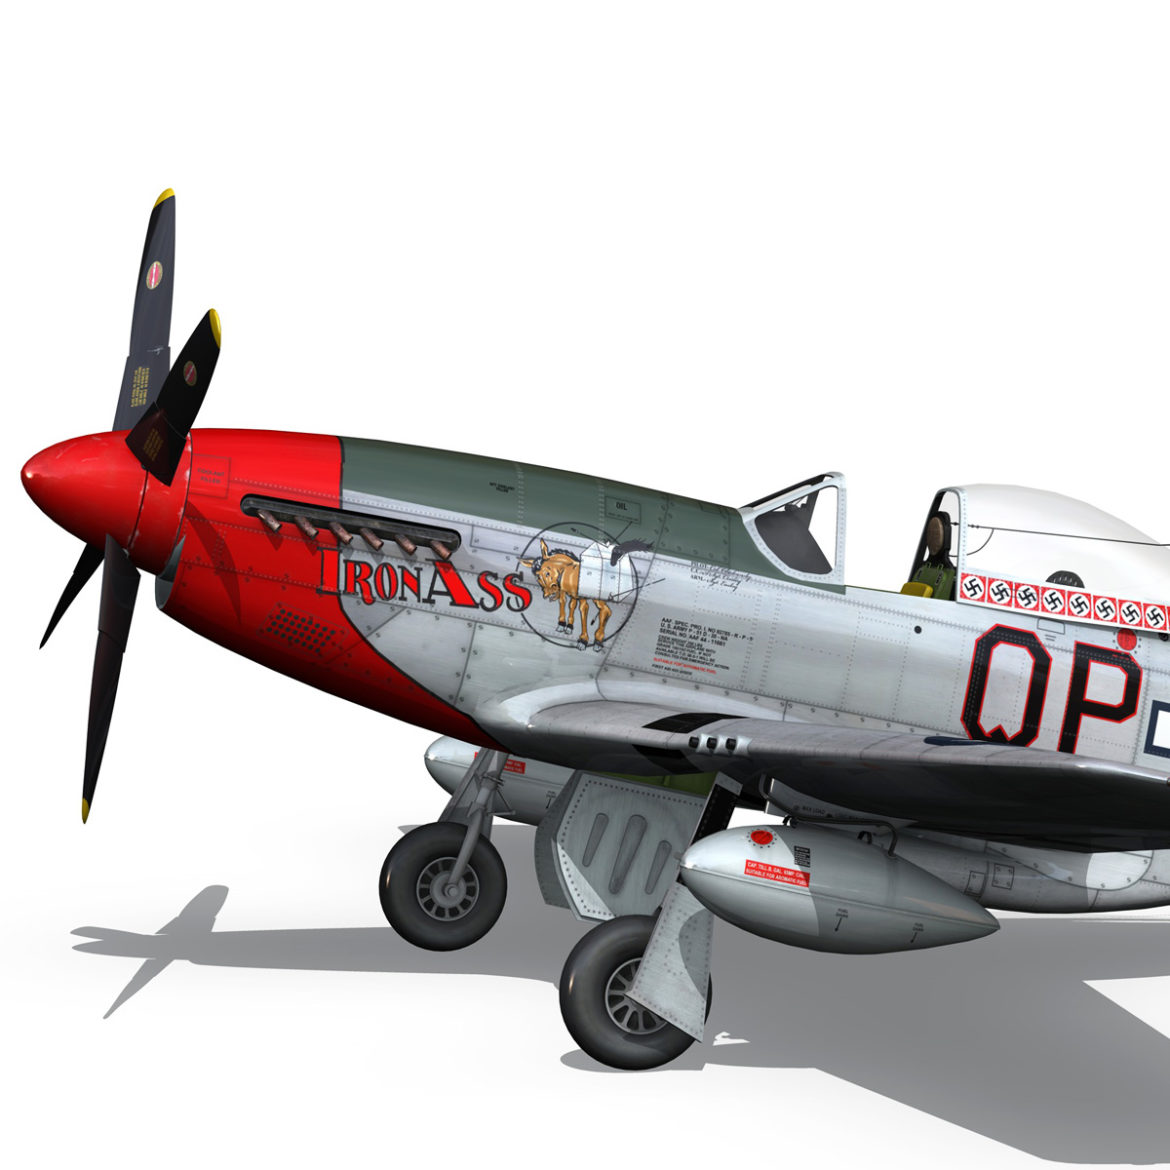 north american p-51d mustang – iron ass 3d model fbx c4d lwo obj 294283